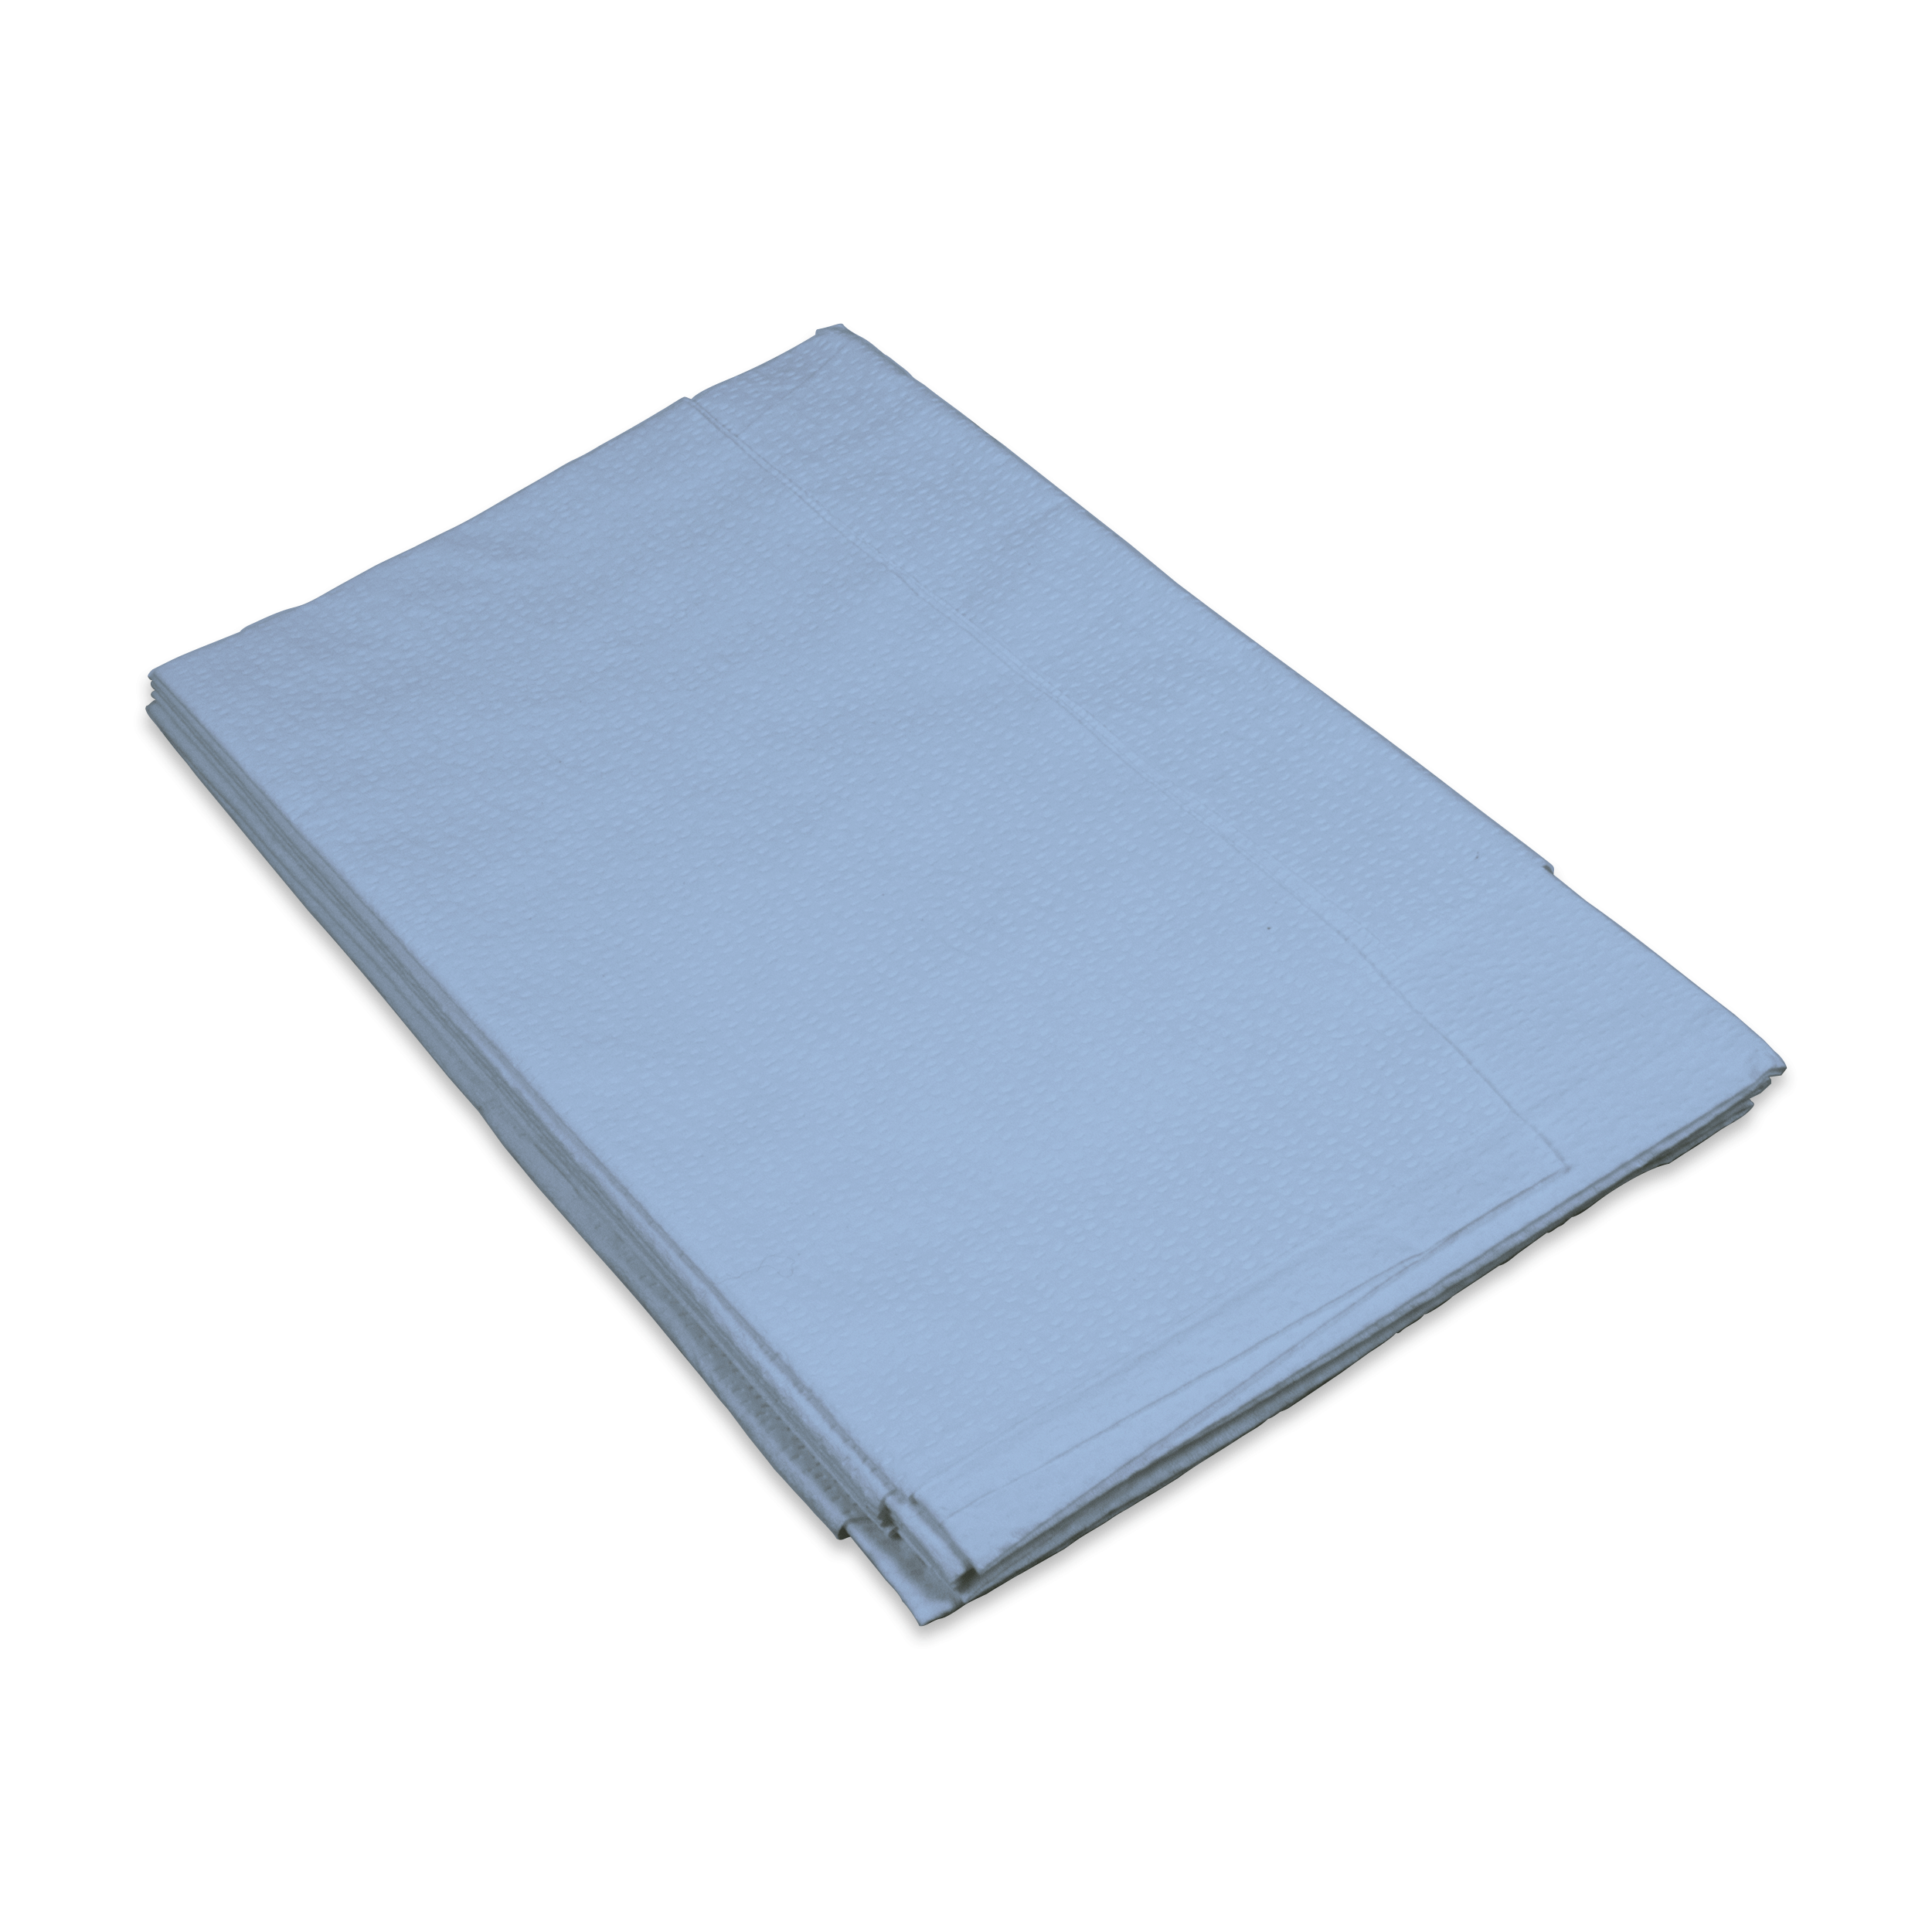 Drape Sheets (Blue) 2ply Tissue 40 x 48